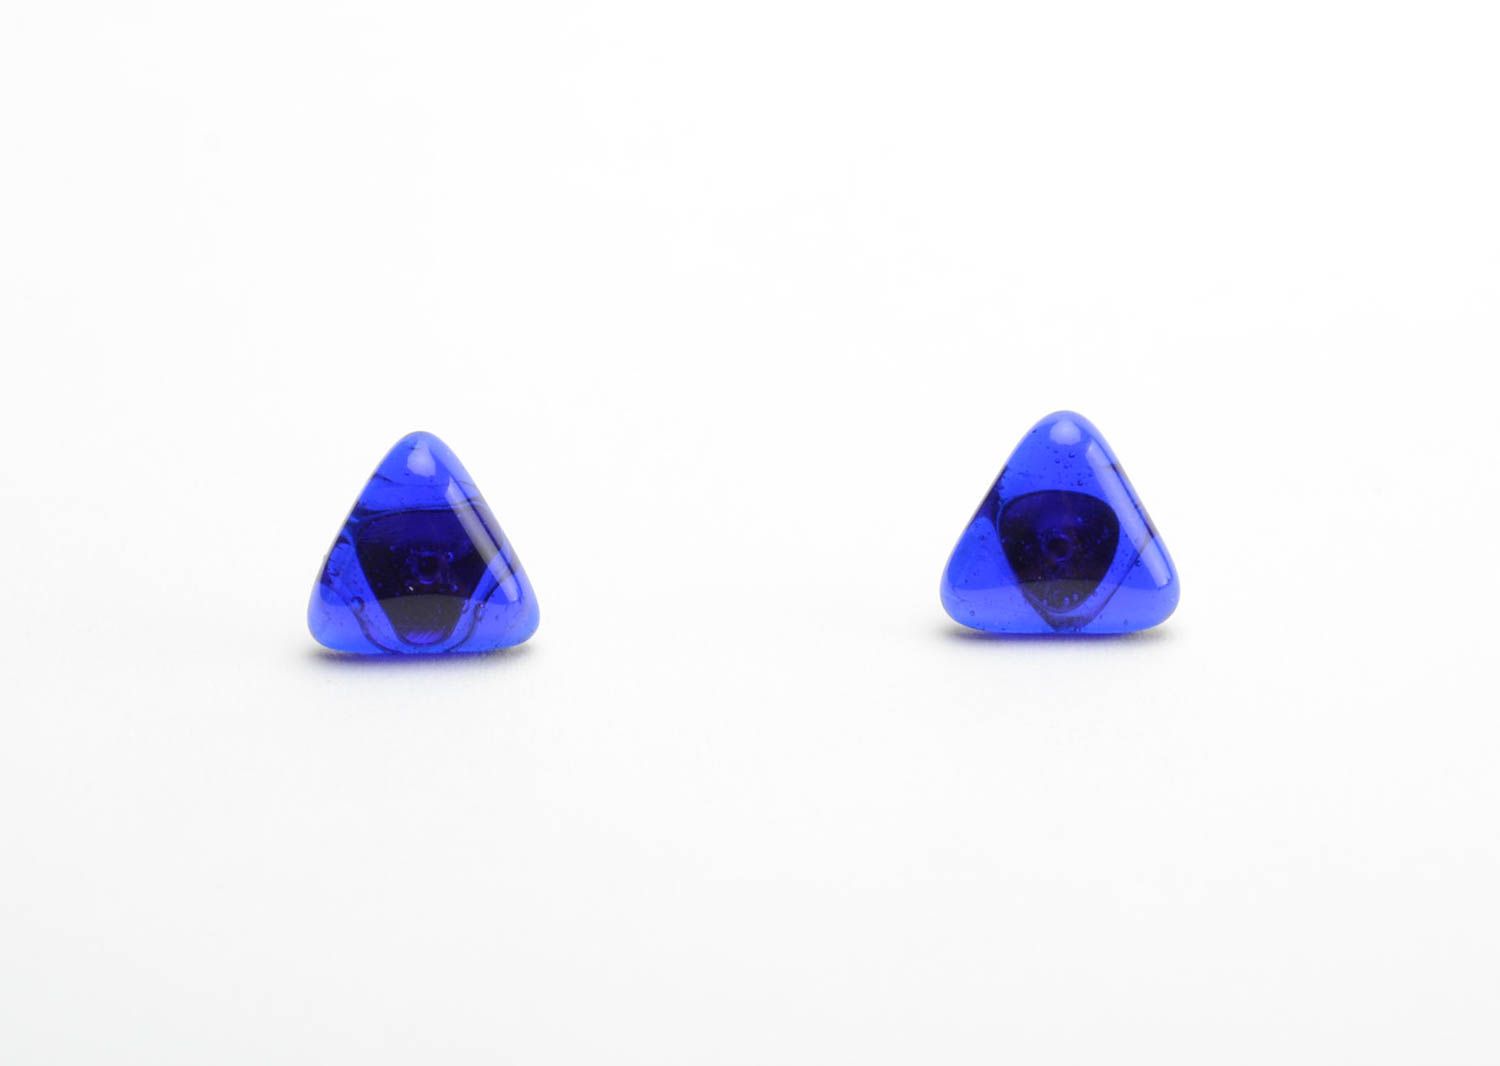 Blue small fusing glass triangular stud earrings handmade every day accessory photo 5